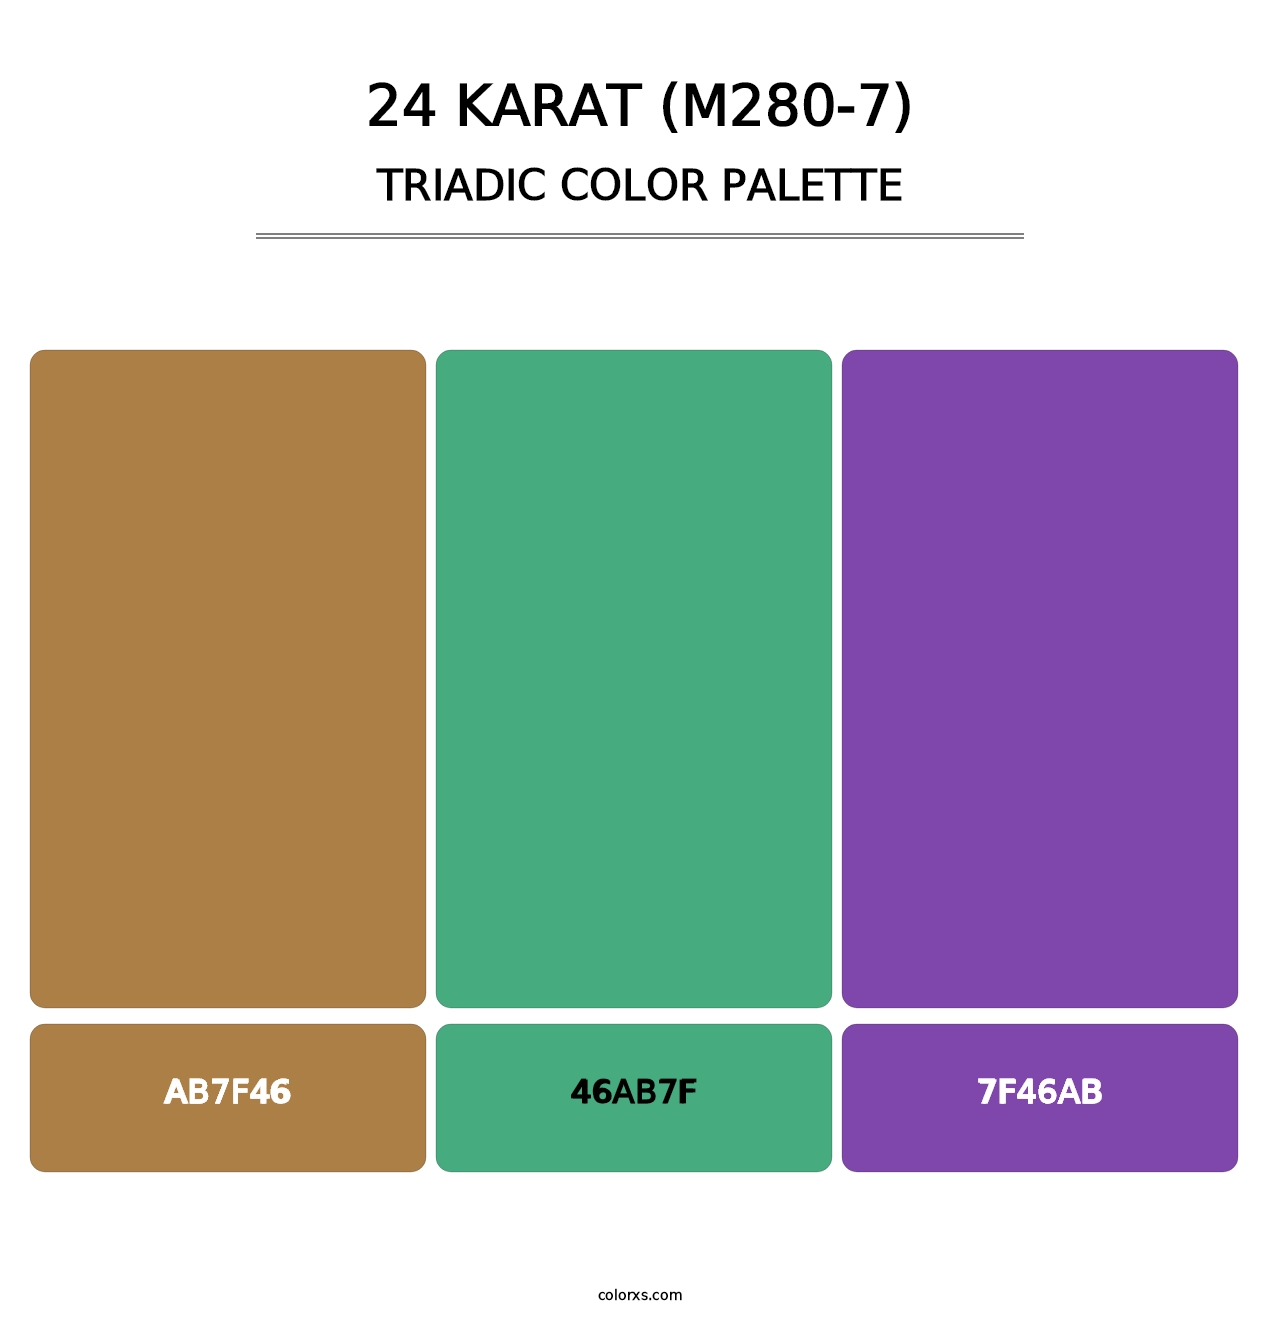 24 Karat (M280-7) - Triadic Color Palette